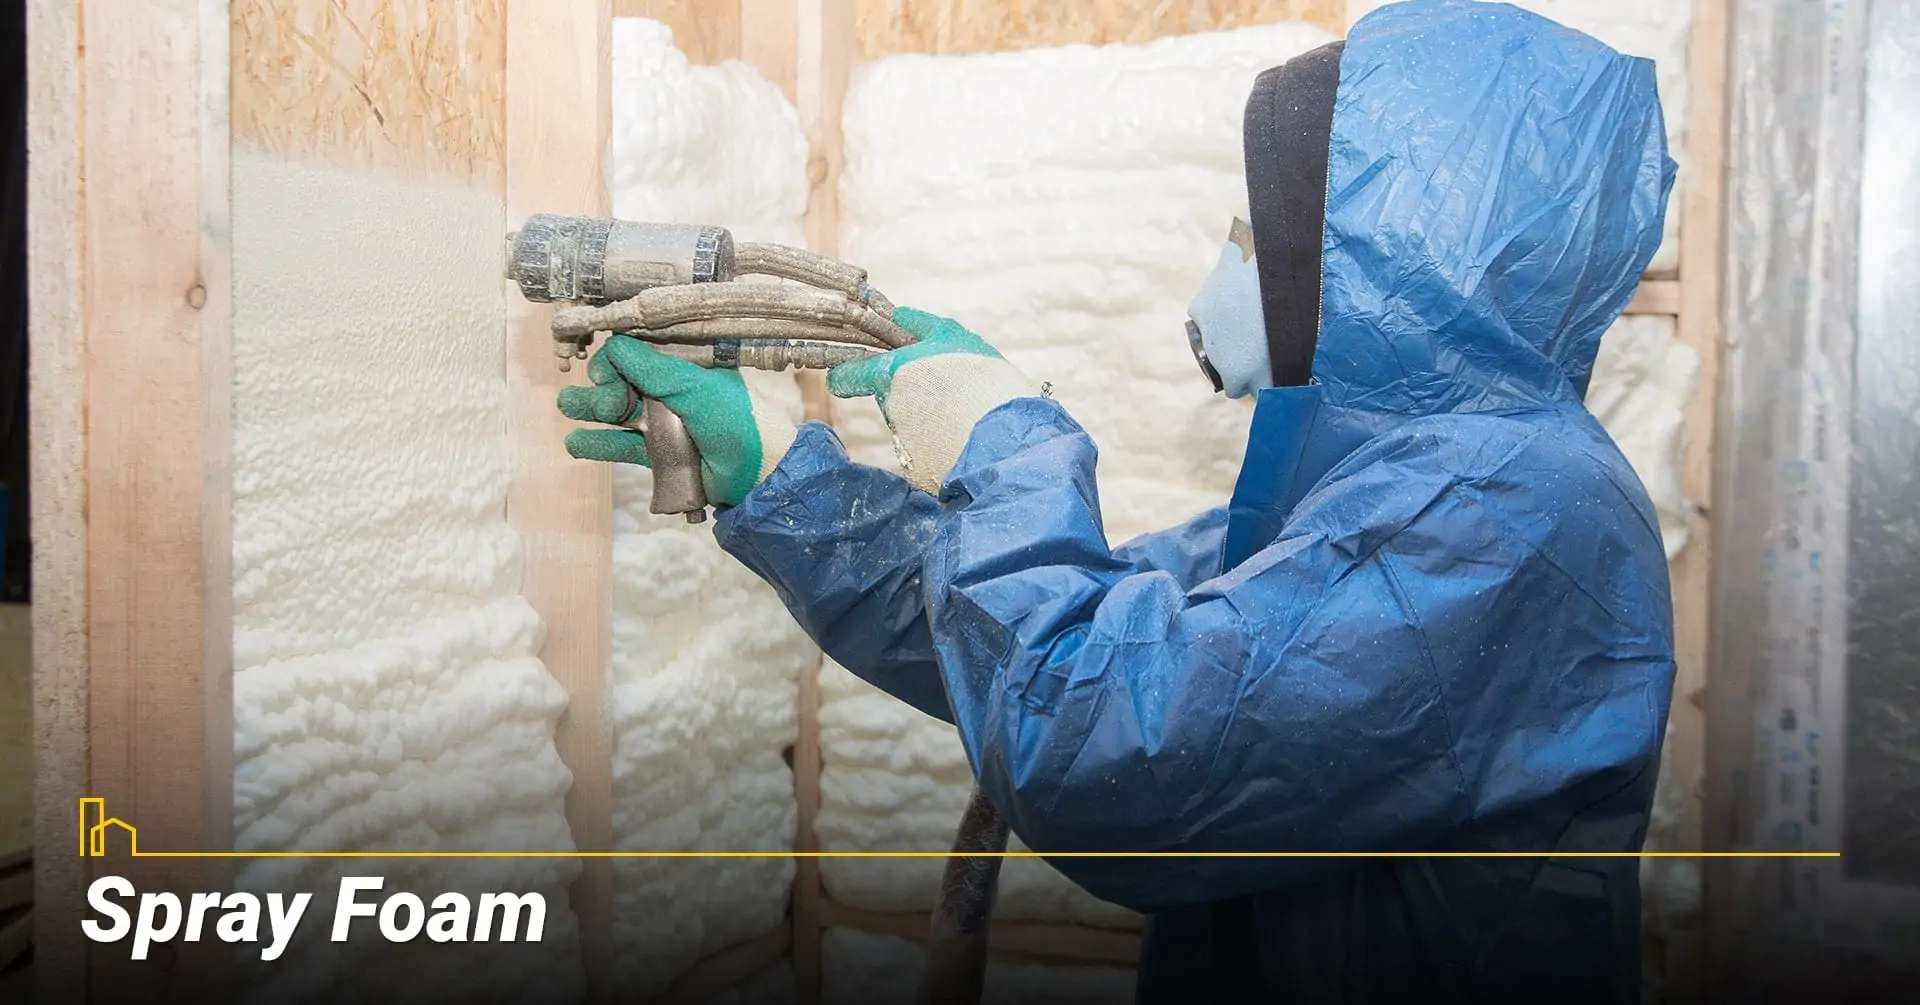 Spray Foam, use spray foam as insulation